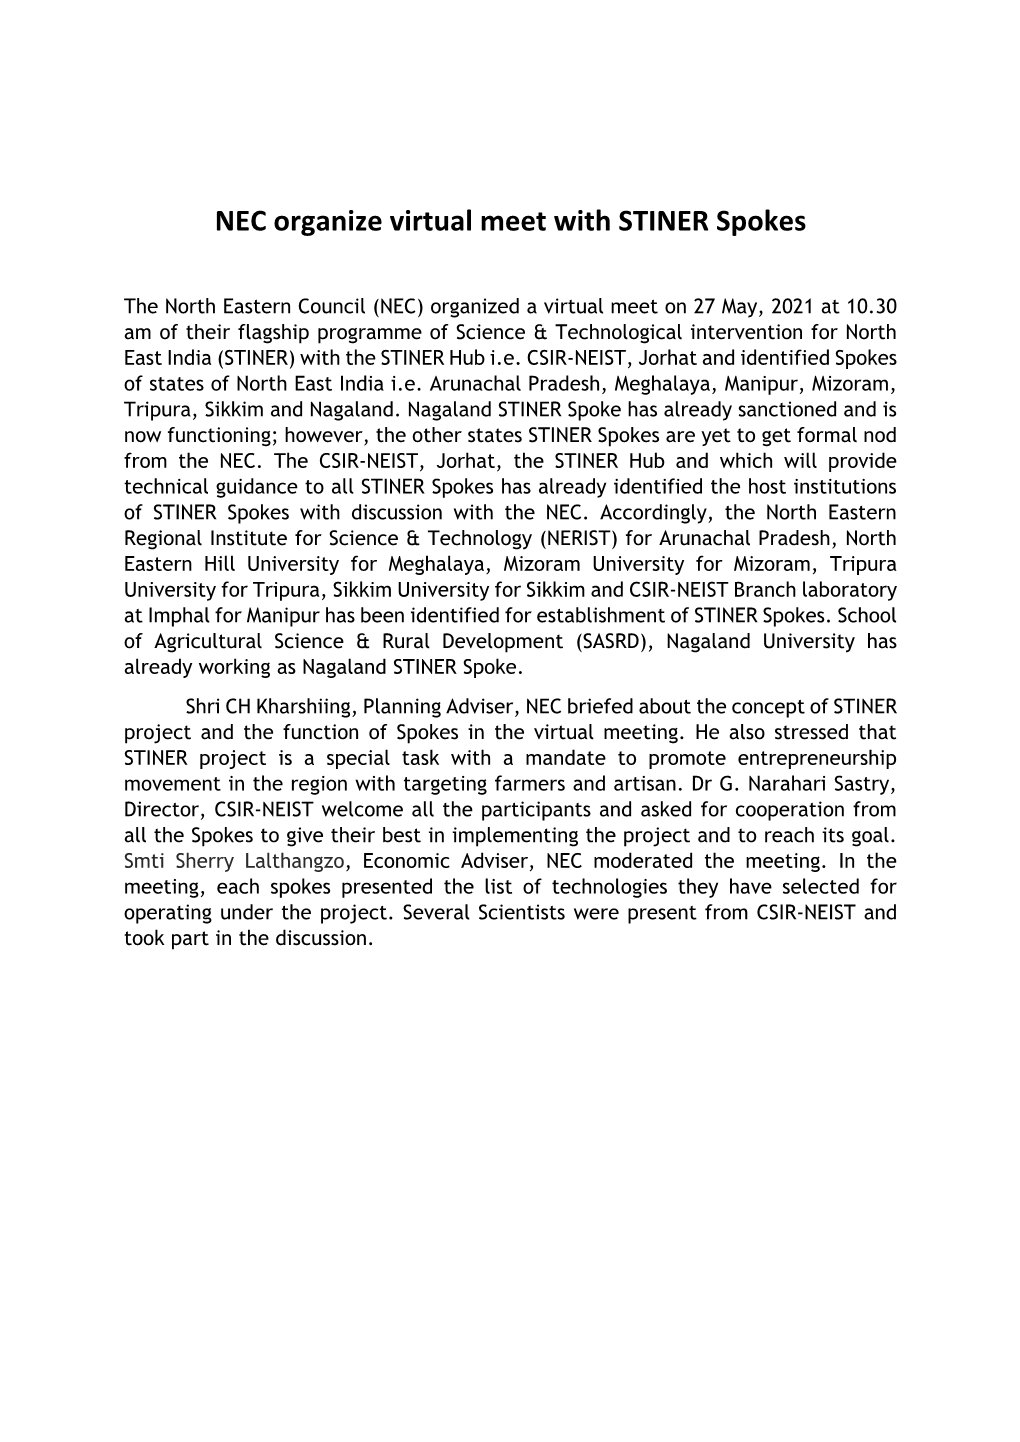 NEC Organize Virtual Meet with STINER Spokes